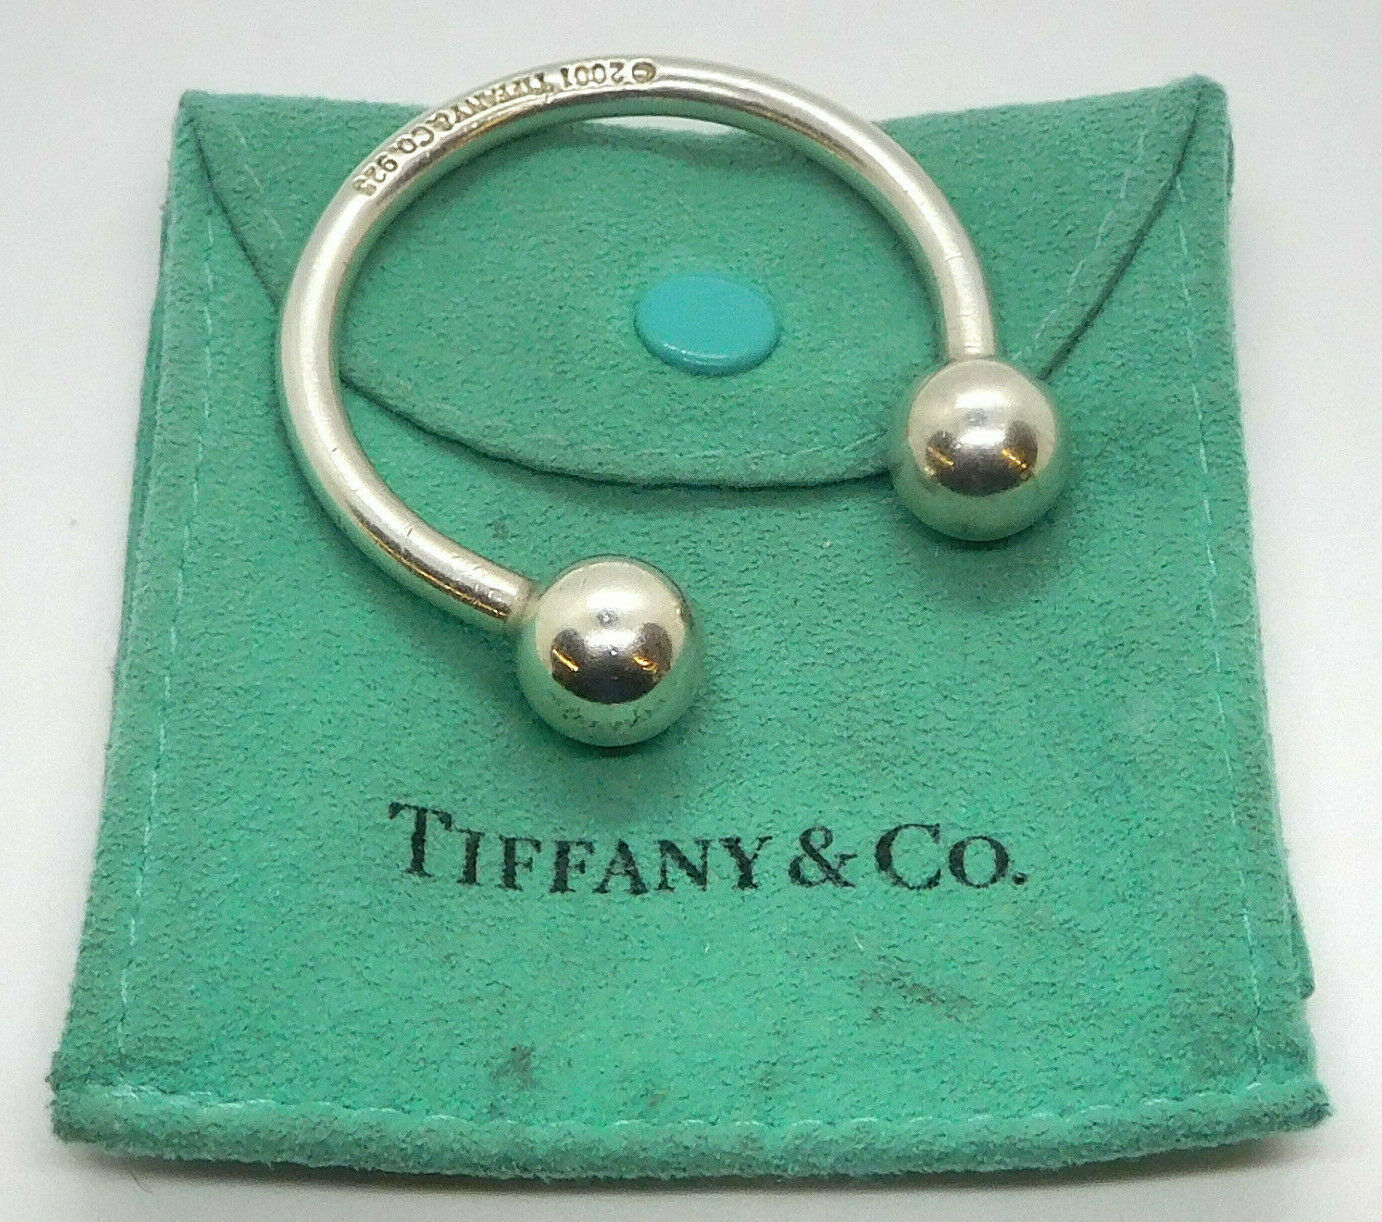 2001 Tiffany & Co. Sterling Silver Key Ring